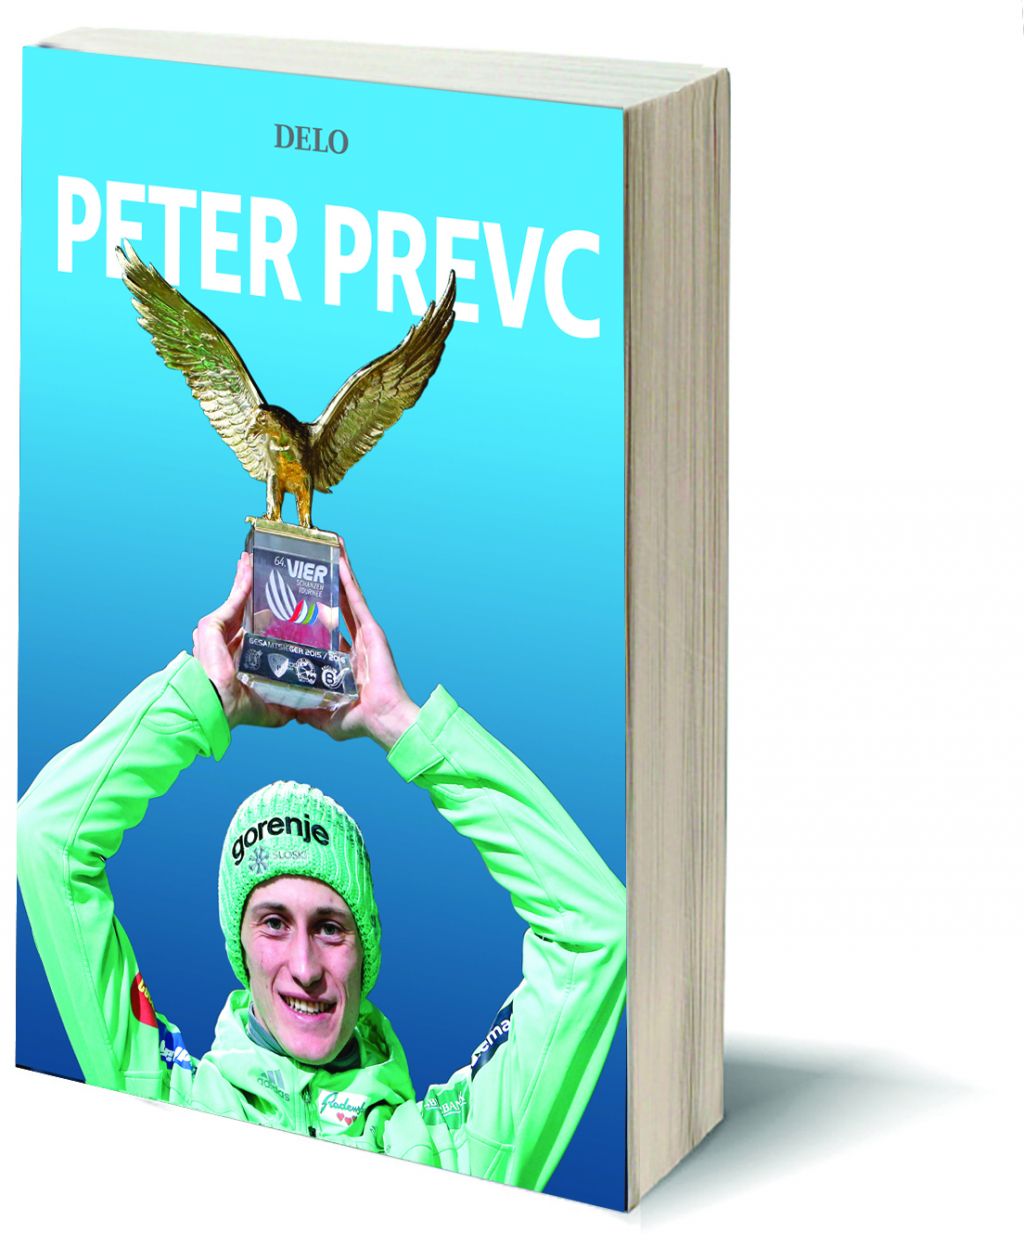 Suzy vam podarja knjige o Petru Prevcu